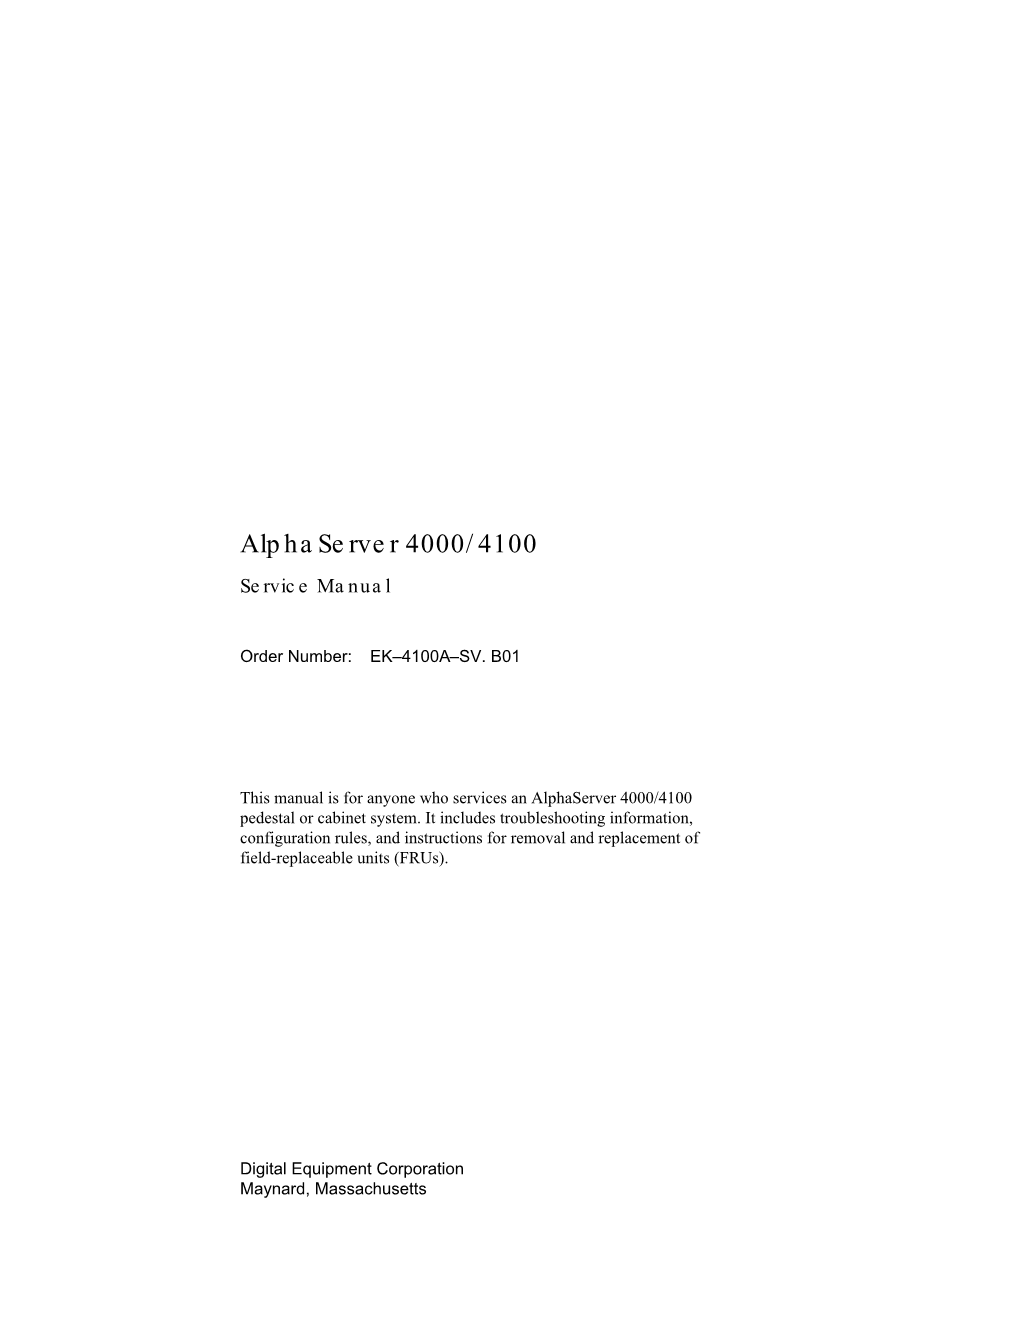 Alphaserver 4000/4100 Service Manual